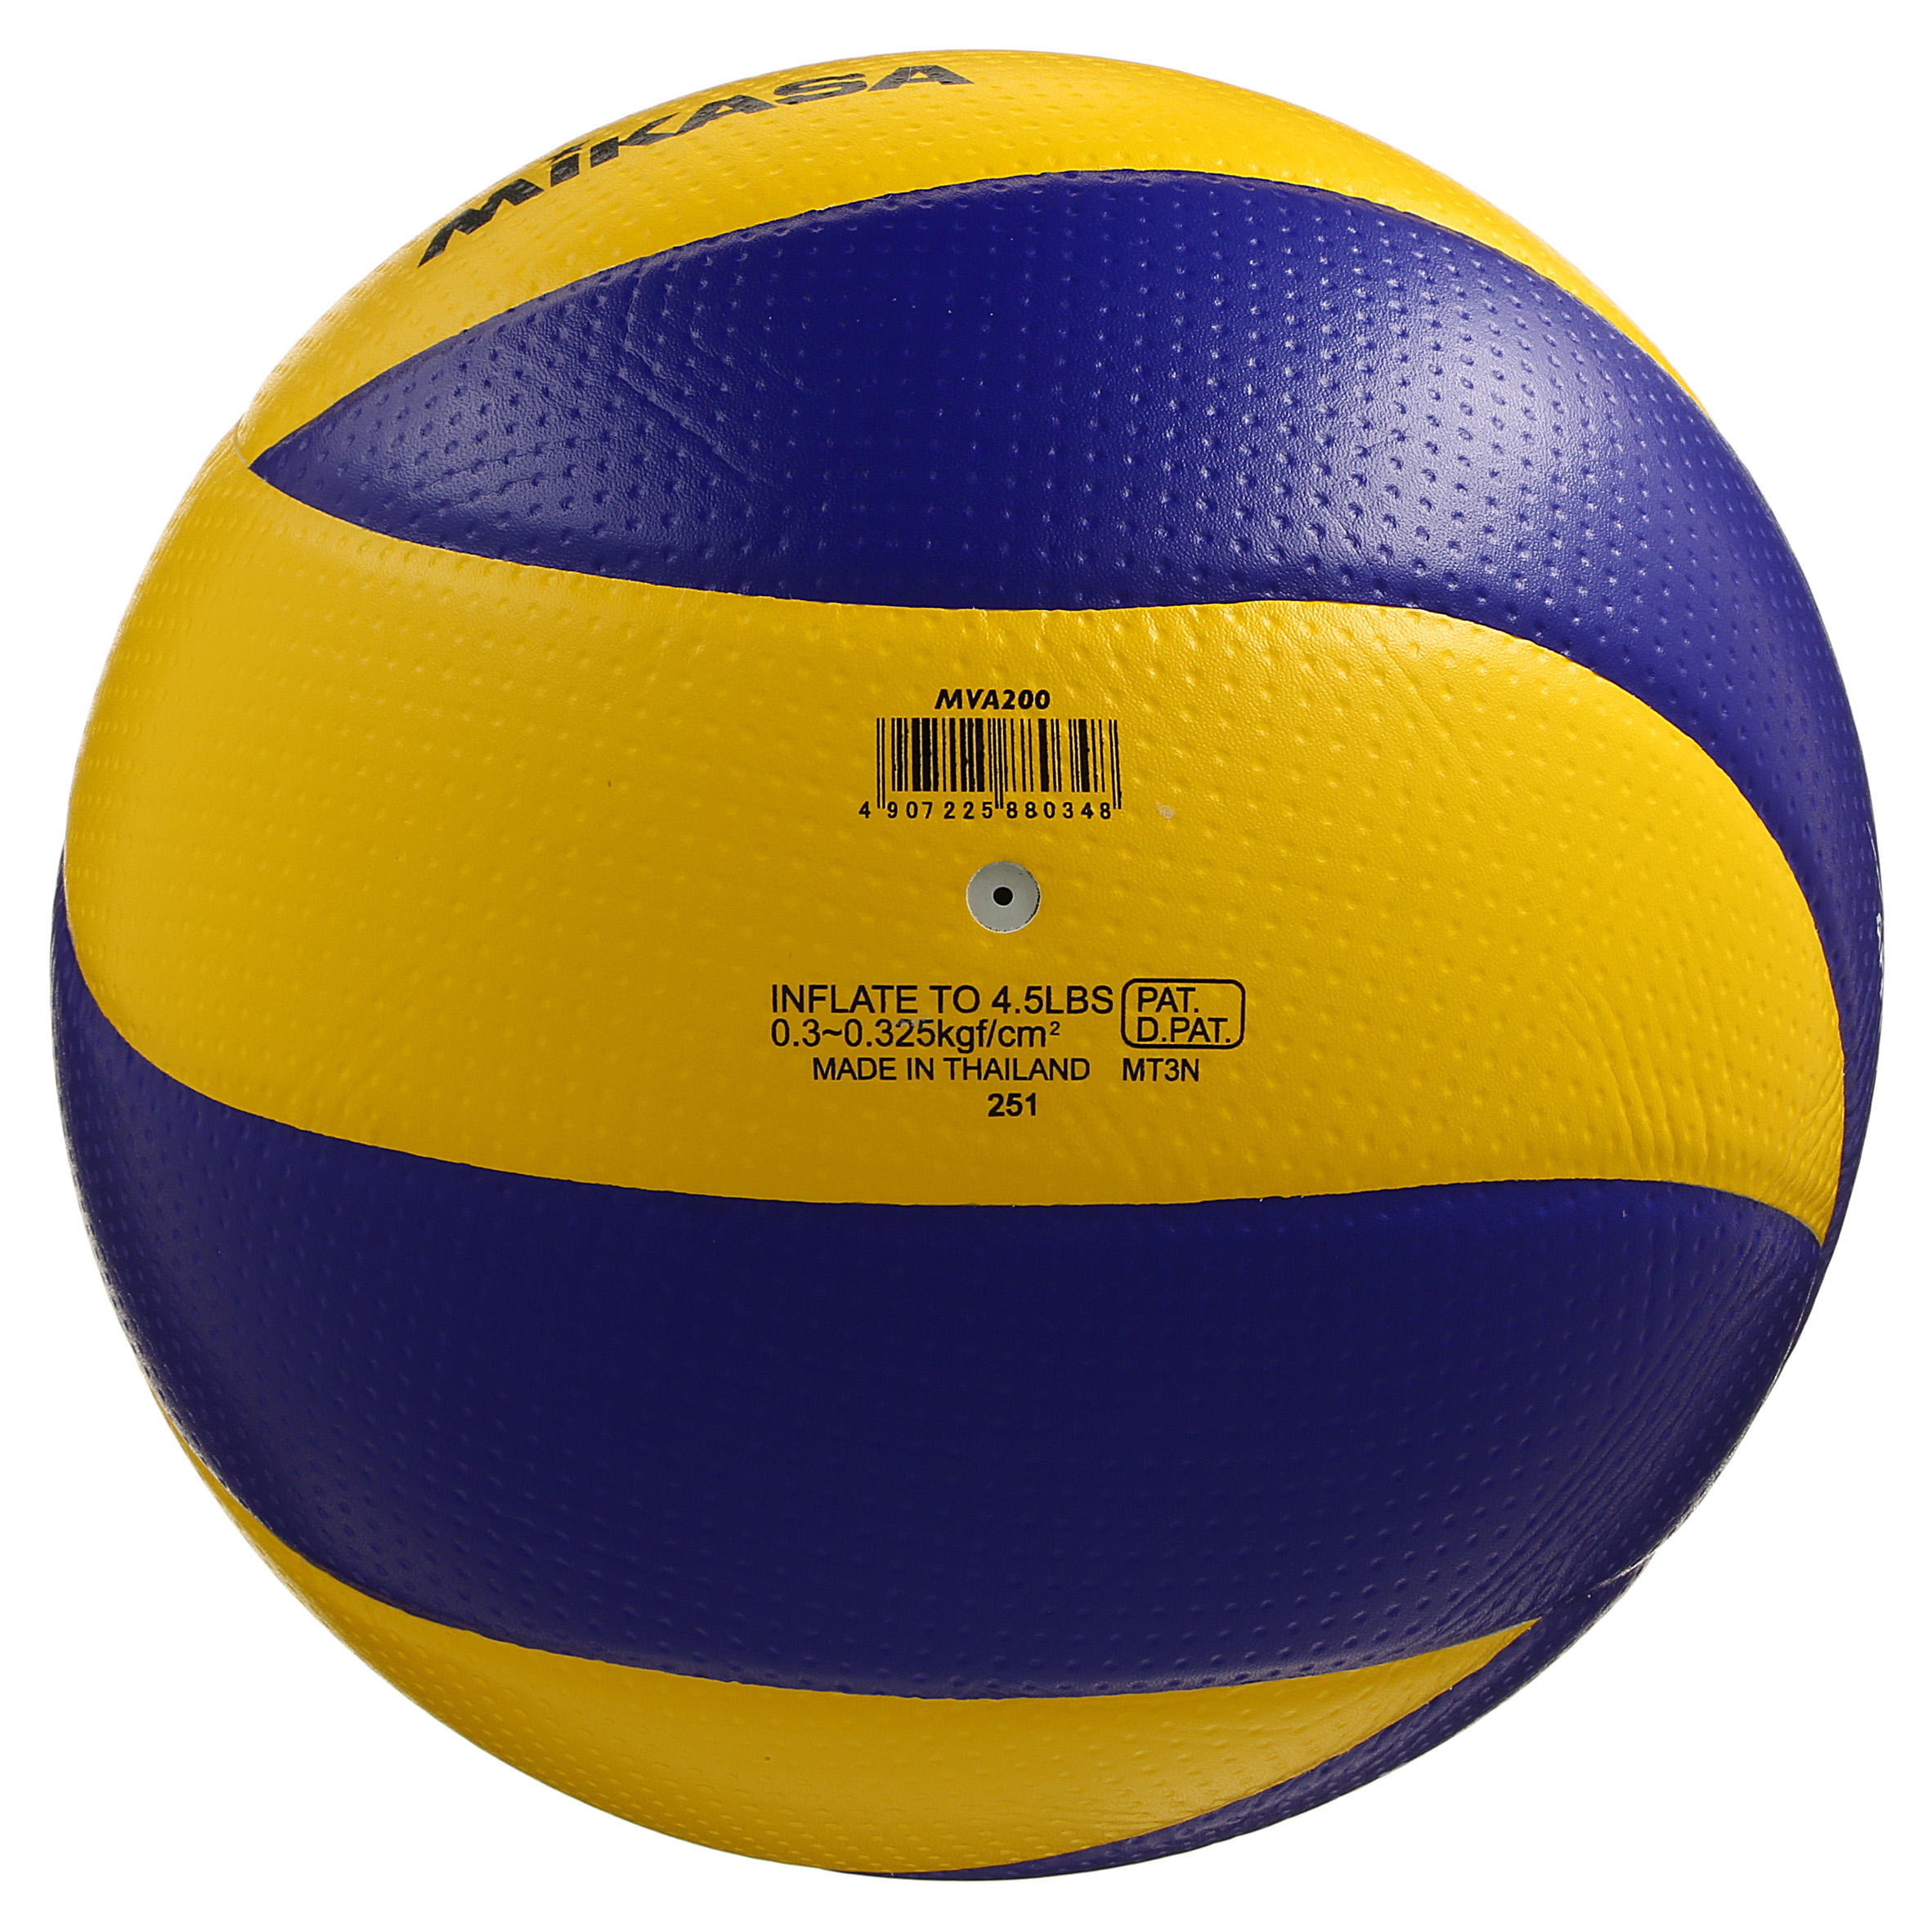 MVA 200 Volleyball - Yellow Blue 4/8